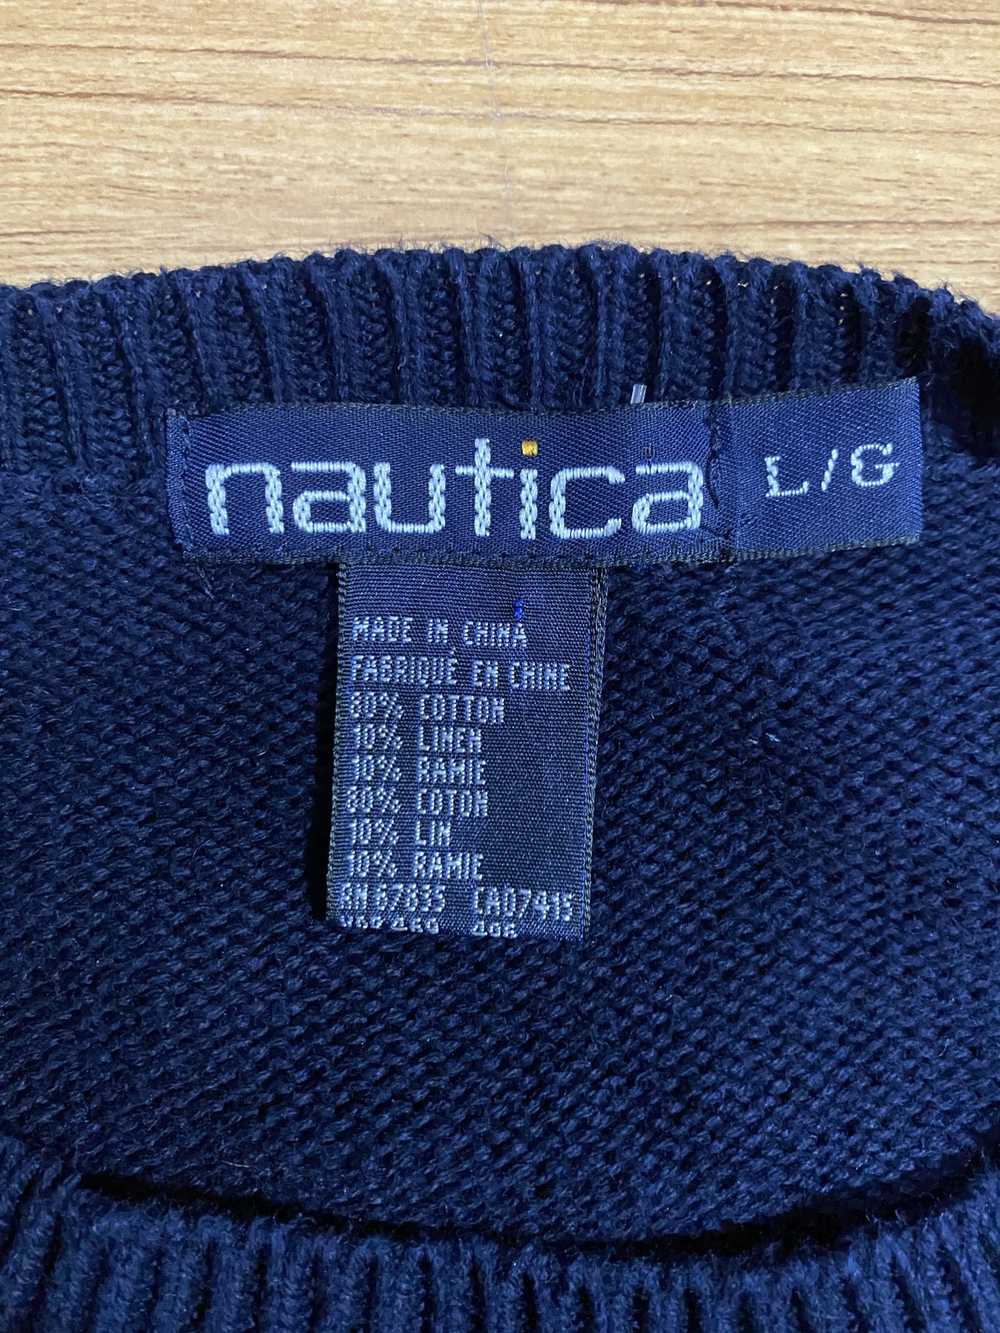 Nautica Vintage 90's Nautica Sailing Knit Sweater - image 3